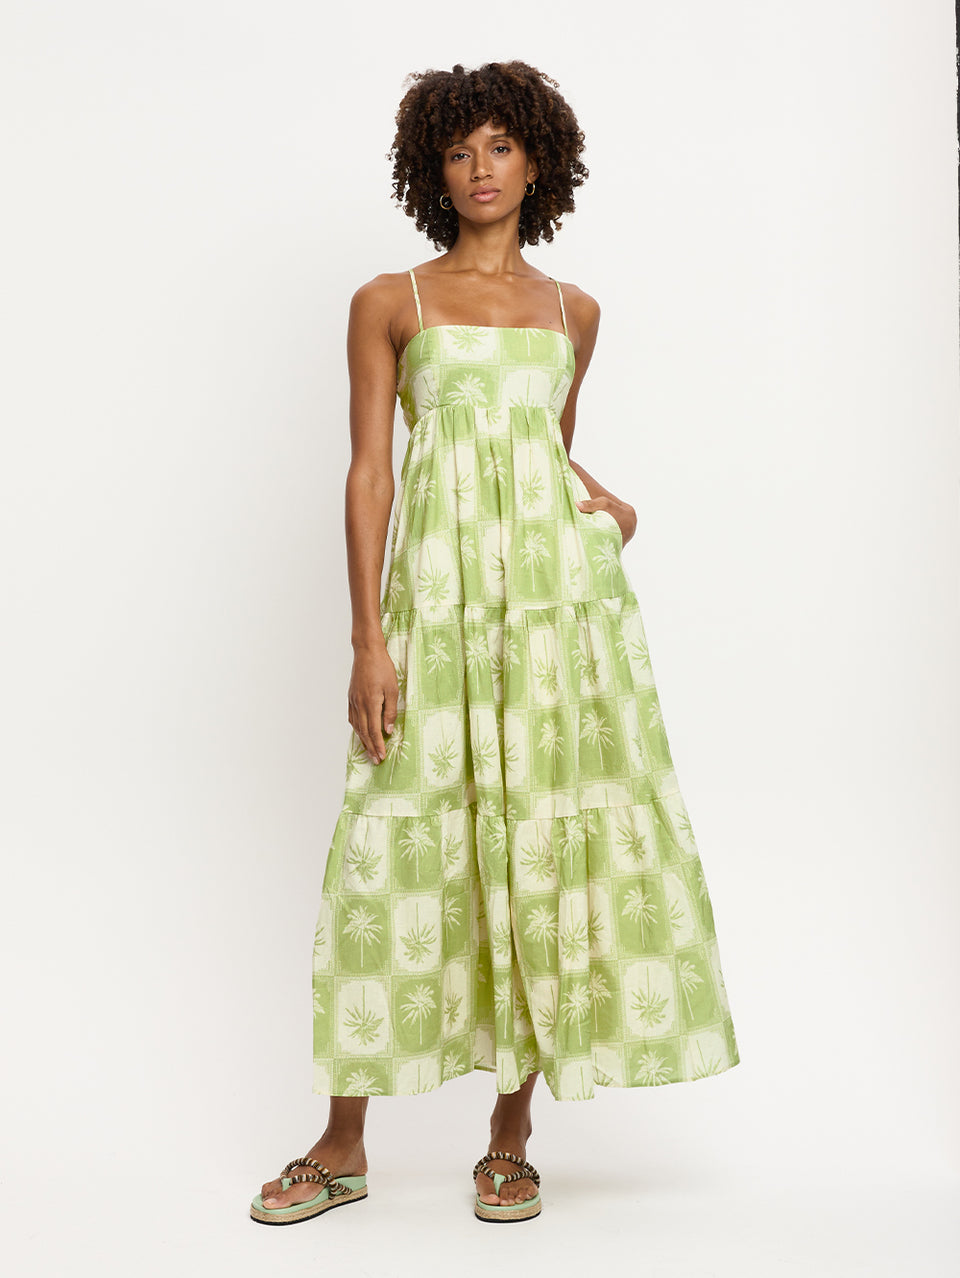 Paradiso Maxi Dress KIVARI | Model wears palm tree printed maxi dress